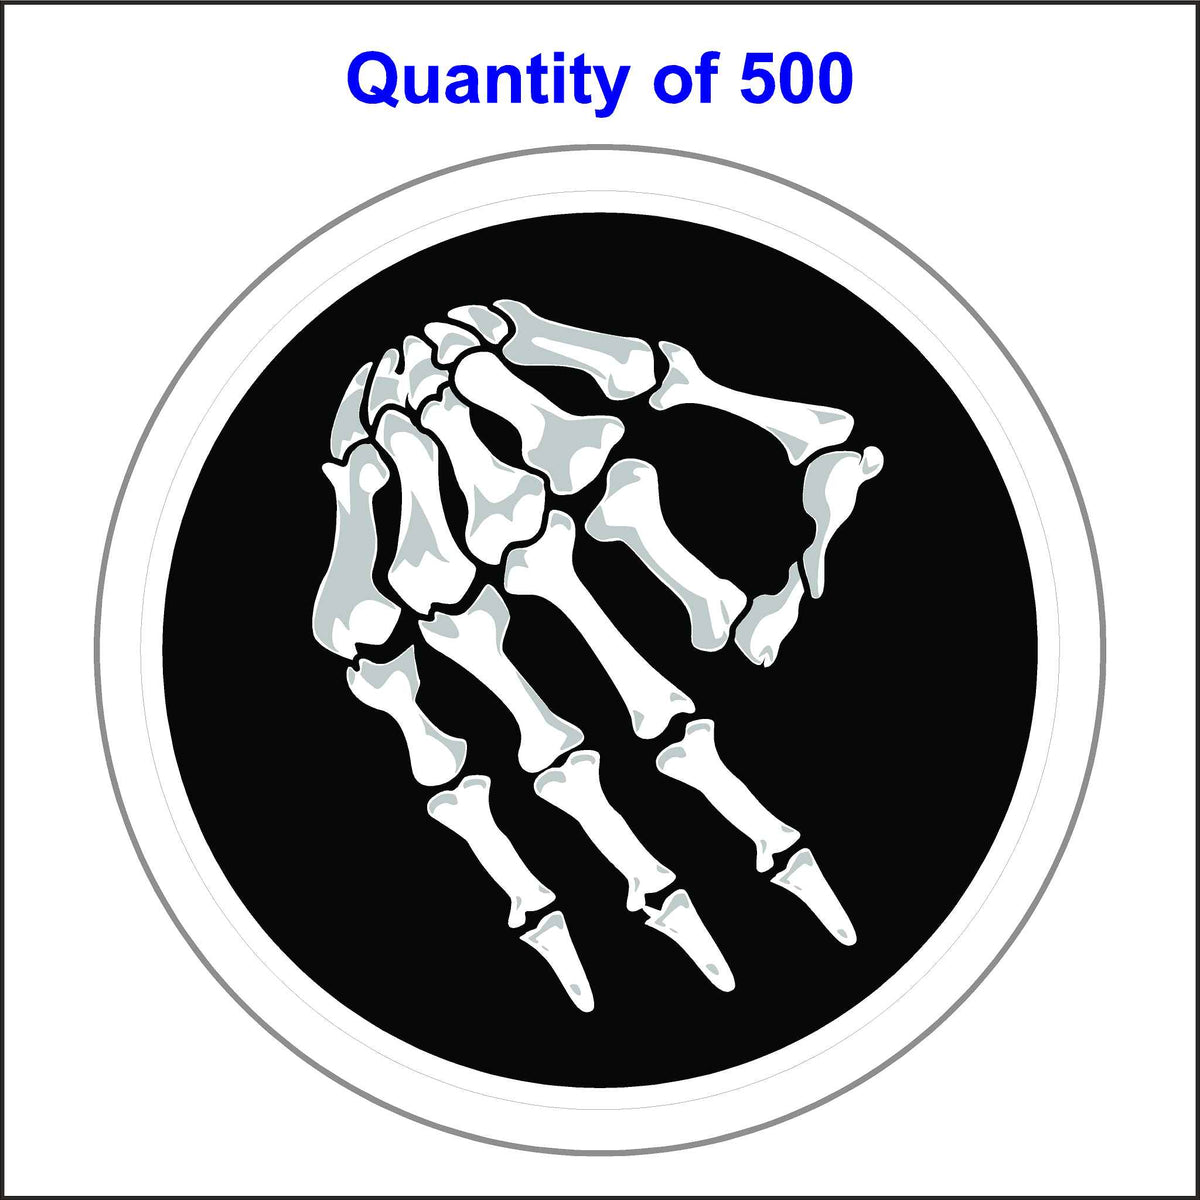 Skeleton Circle Game Sticker. 500 Quantity.